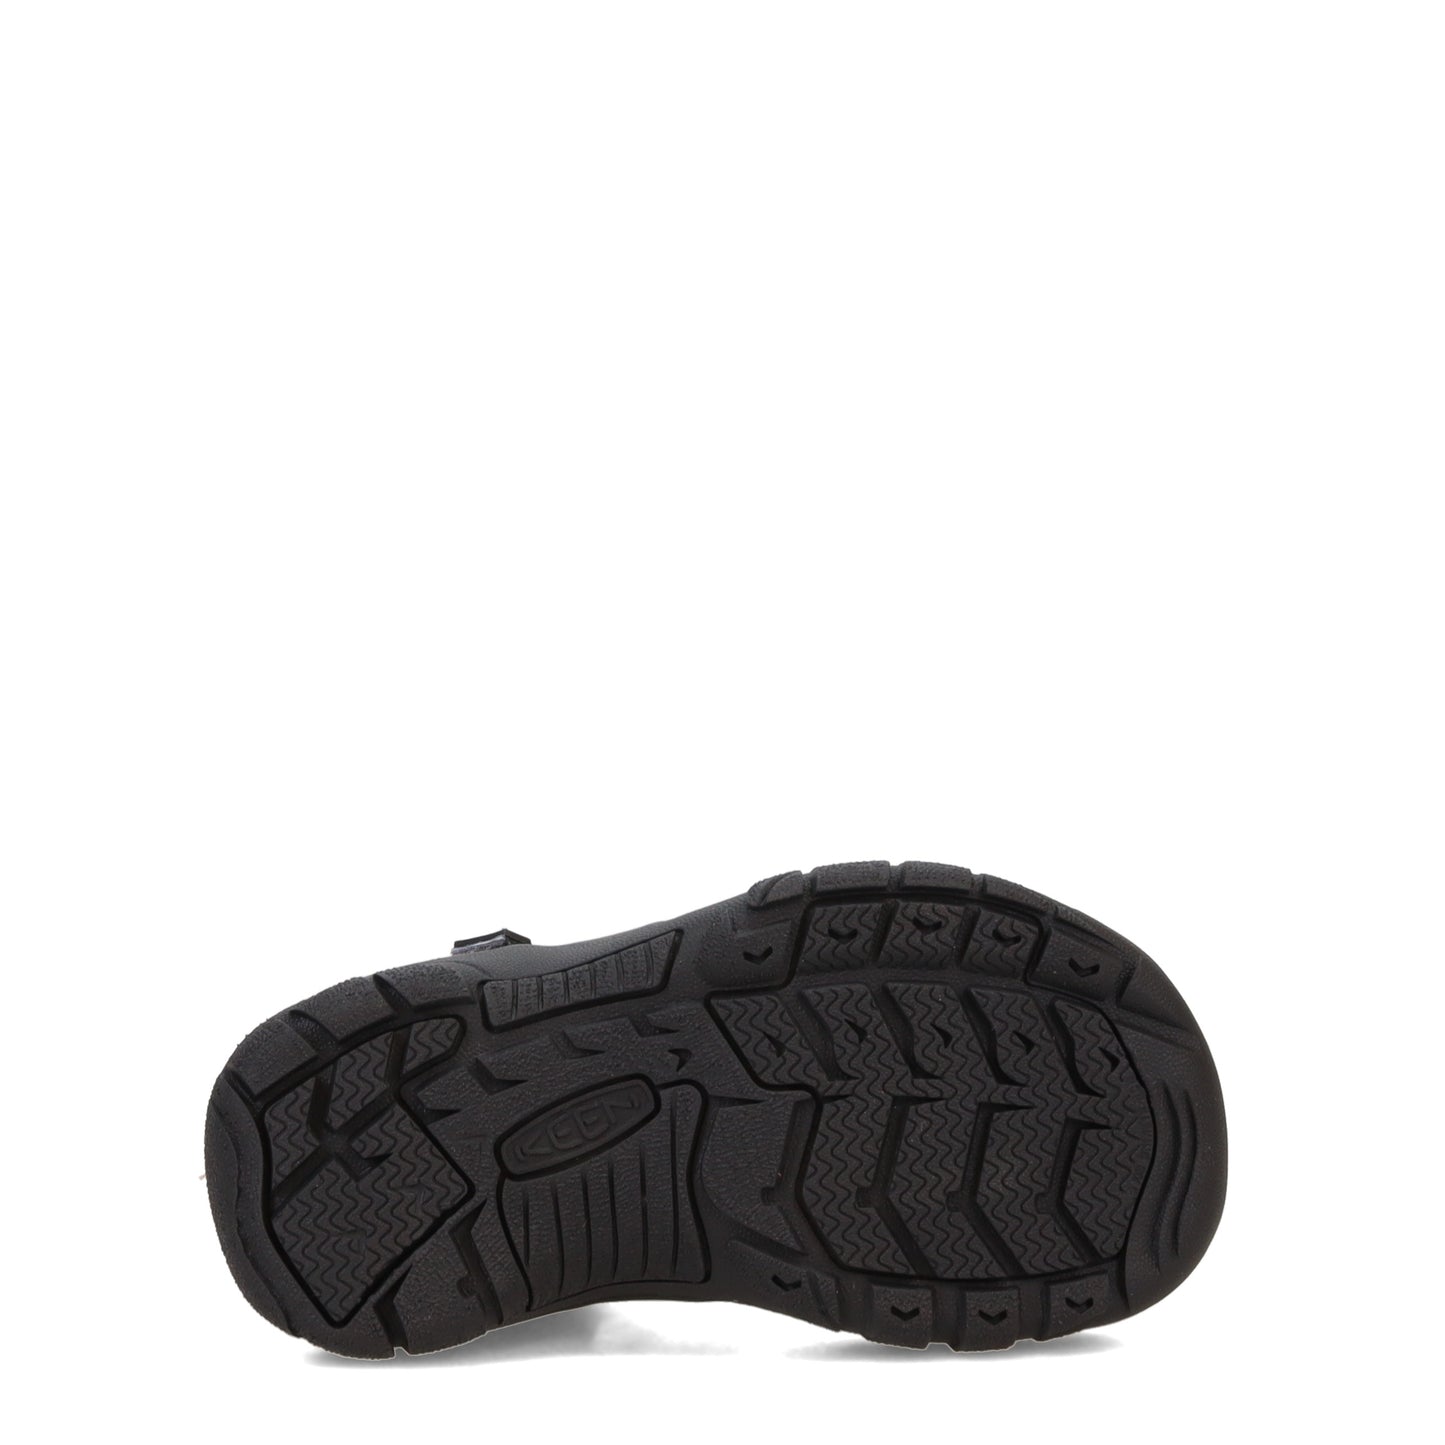 Peltz Shoes  Boy's KEEN Newport H2 Waterproof Sandal - Toddler & Little Kid Steel Grey/Black 1026268